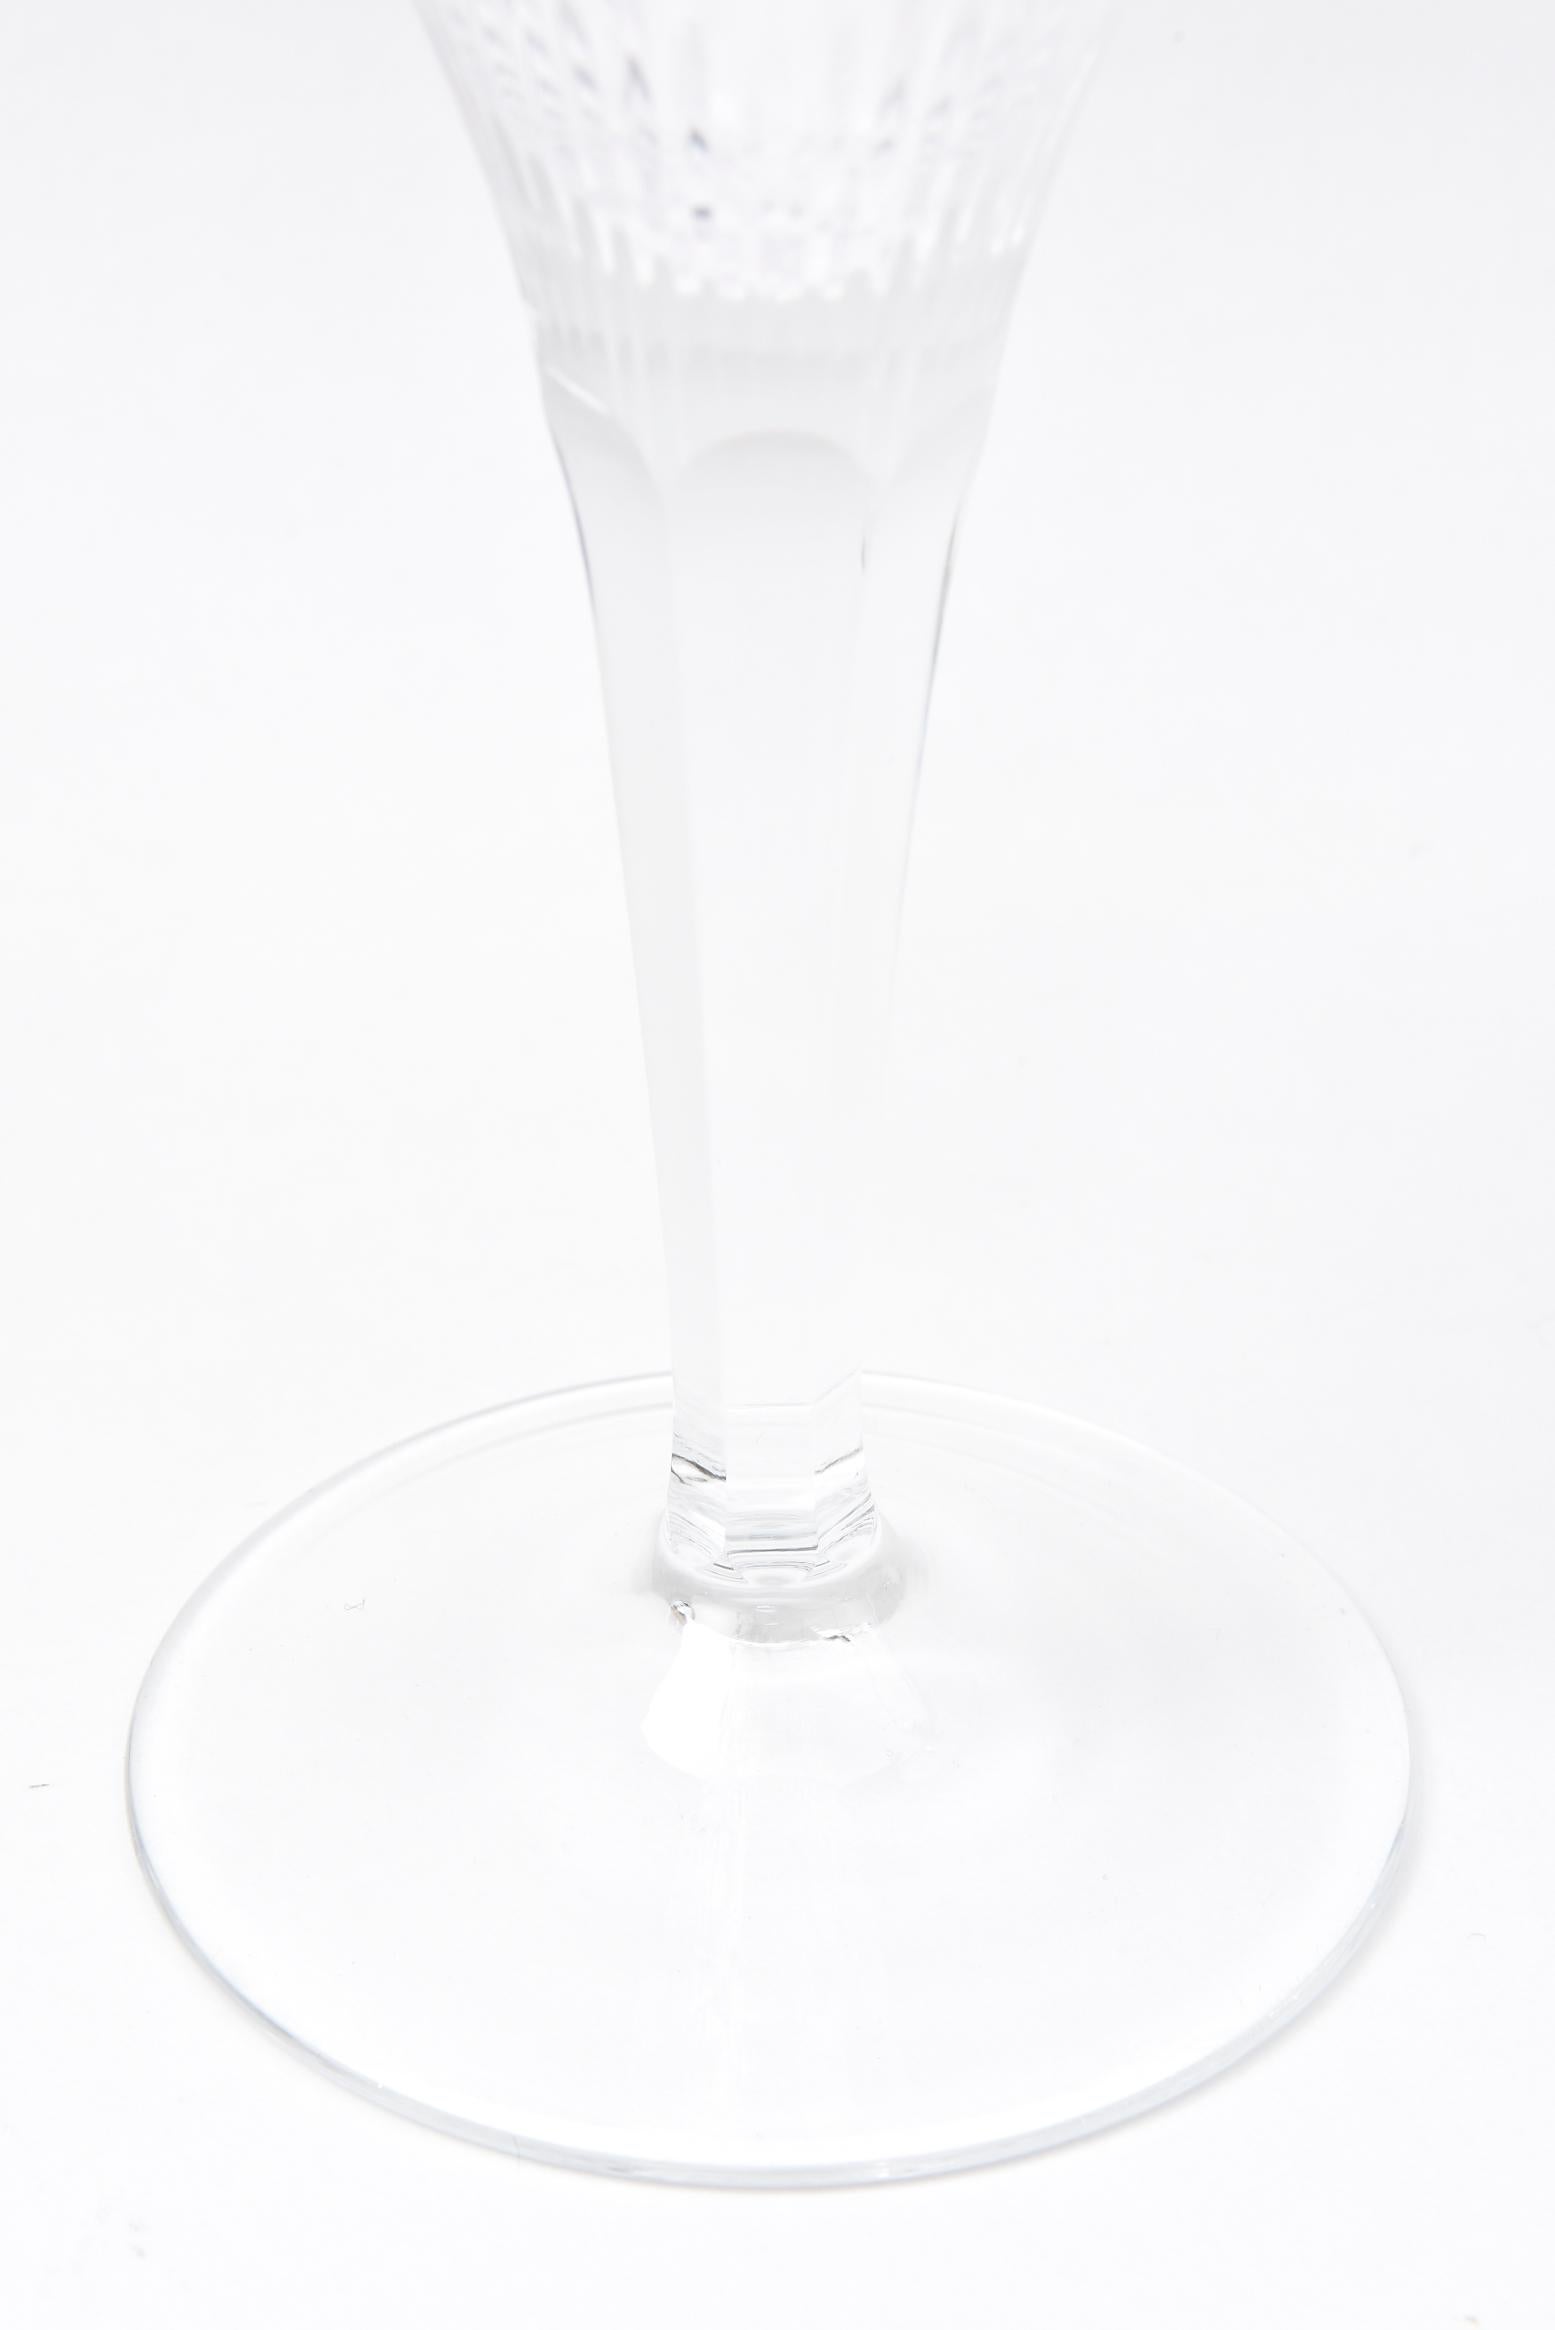 Moser Platinum Trimmed Cut Crystal Goblets, Tall Set of 6 1